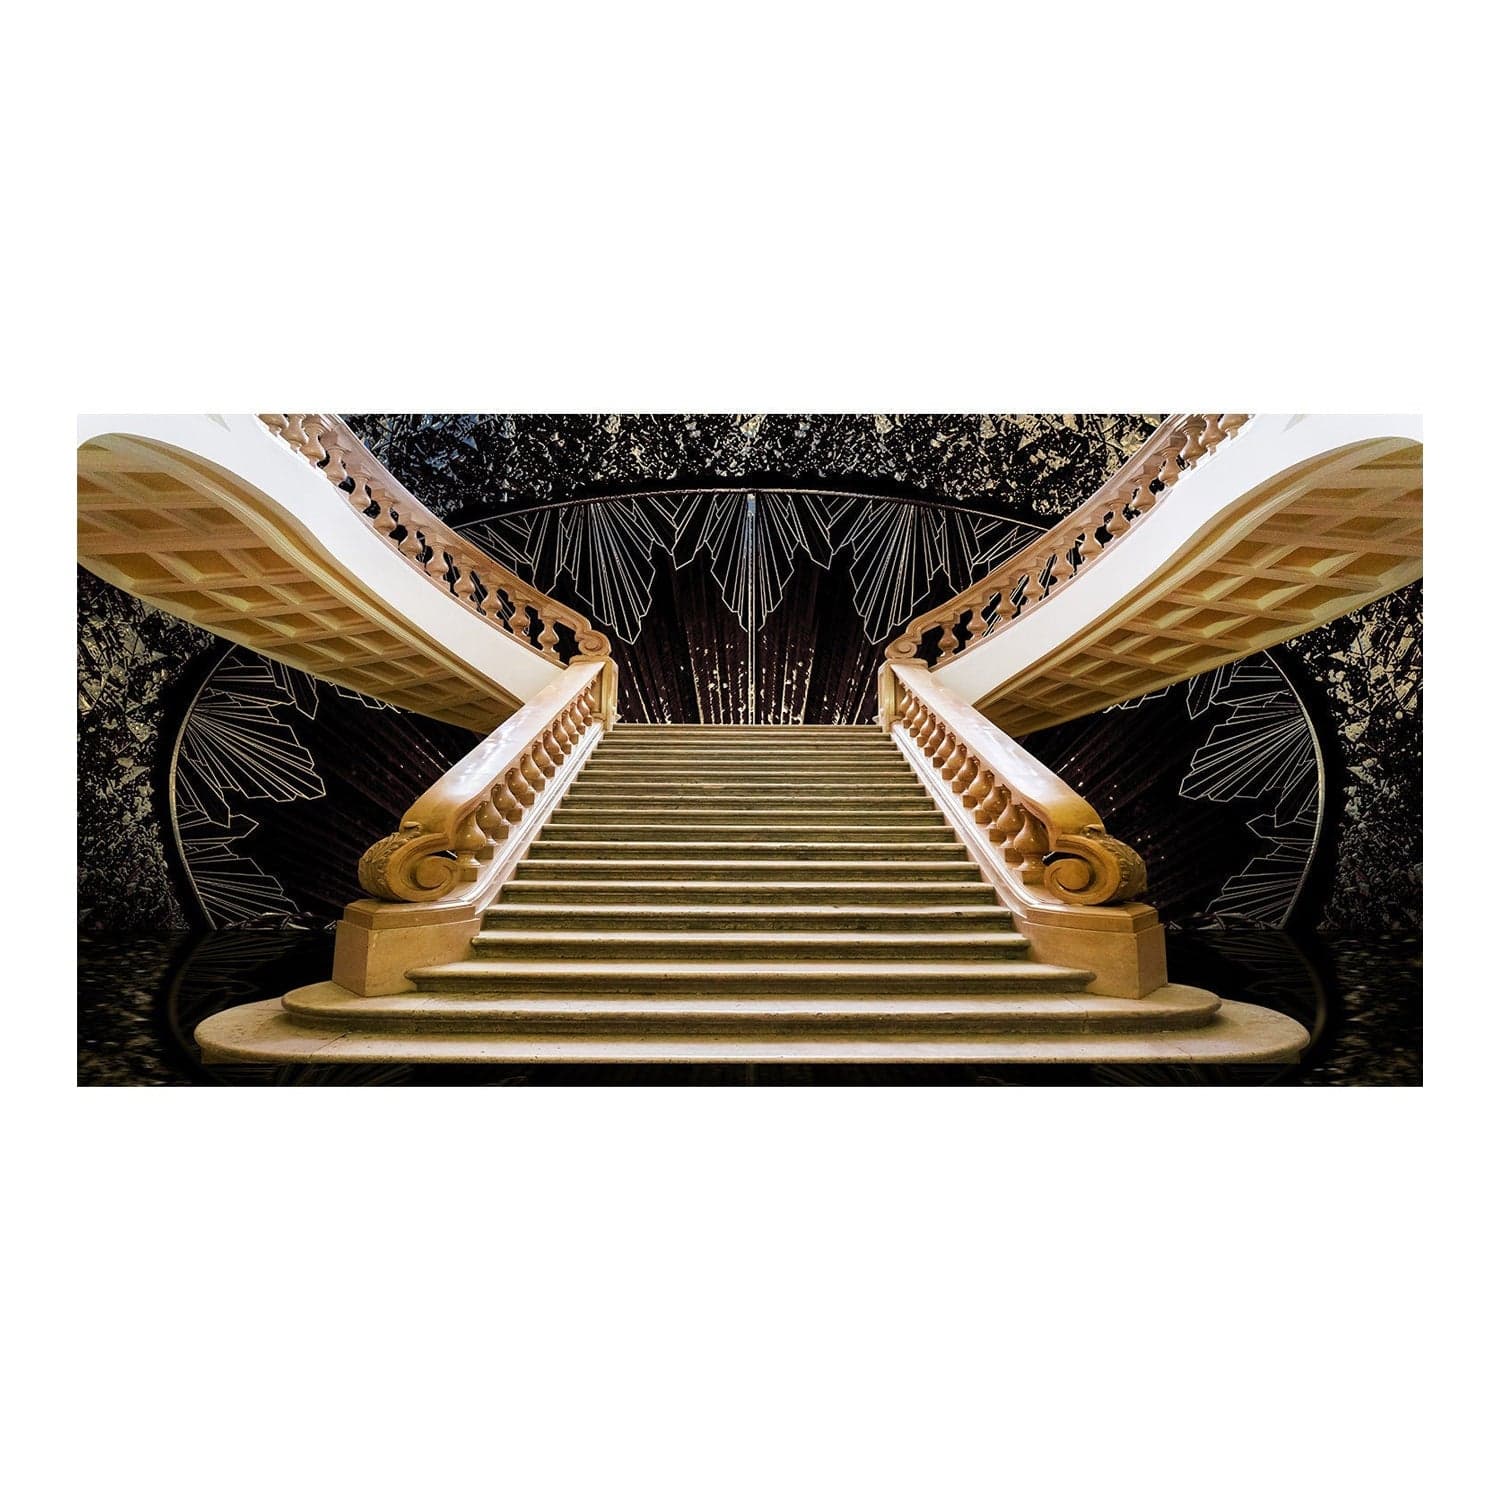 1920s Art Deco Staircase Photo Backdrop - Pro 16  x 9  